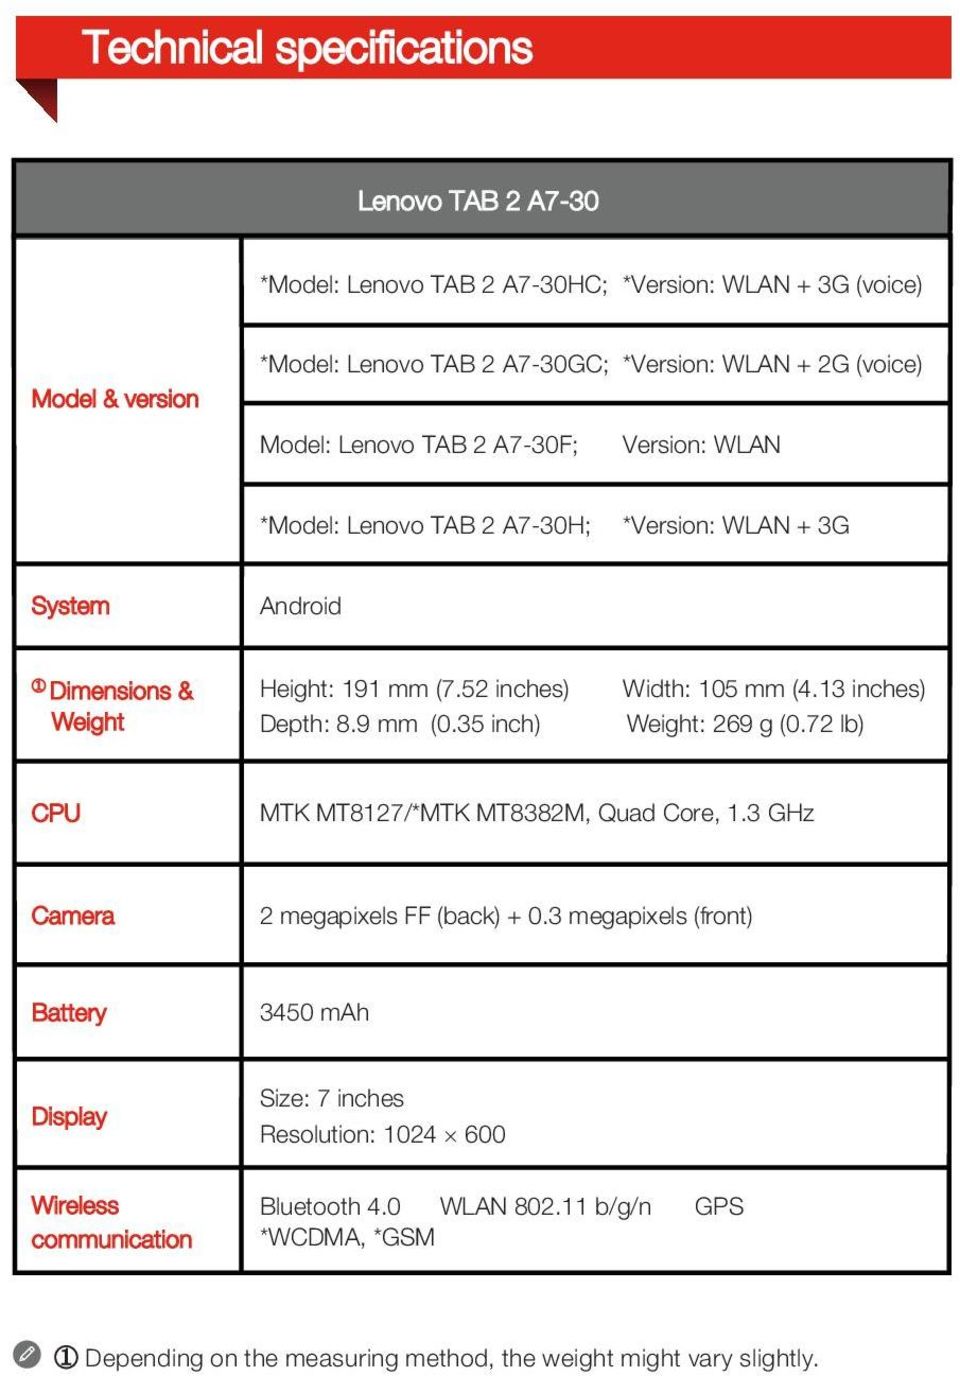 35 inch) Width: 105 mm (4.13 inches) Weight: 269 g (0.72 lb) CPU MTK MT8127/*MTK MT8382M, Quad Core, 1.3 GHz Camera 2 megapixels FF (back) + 0.